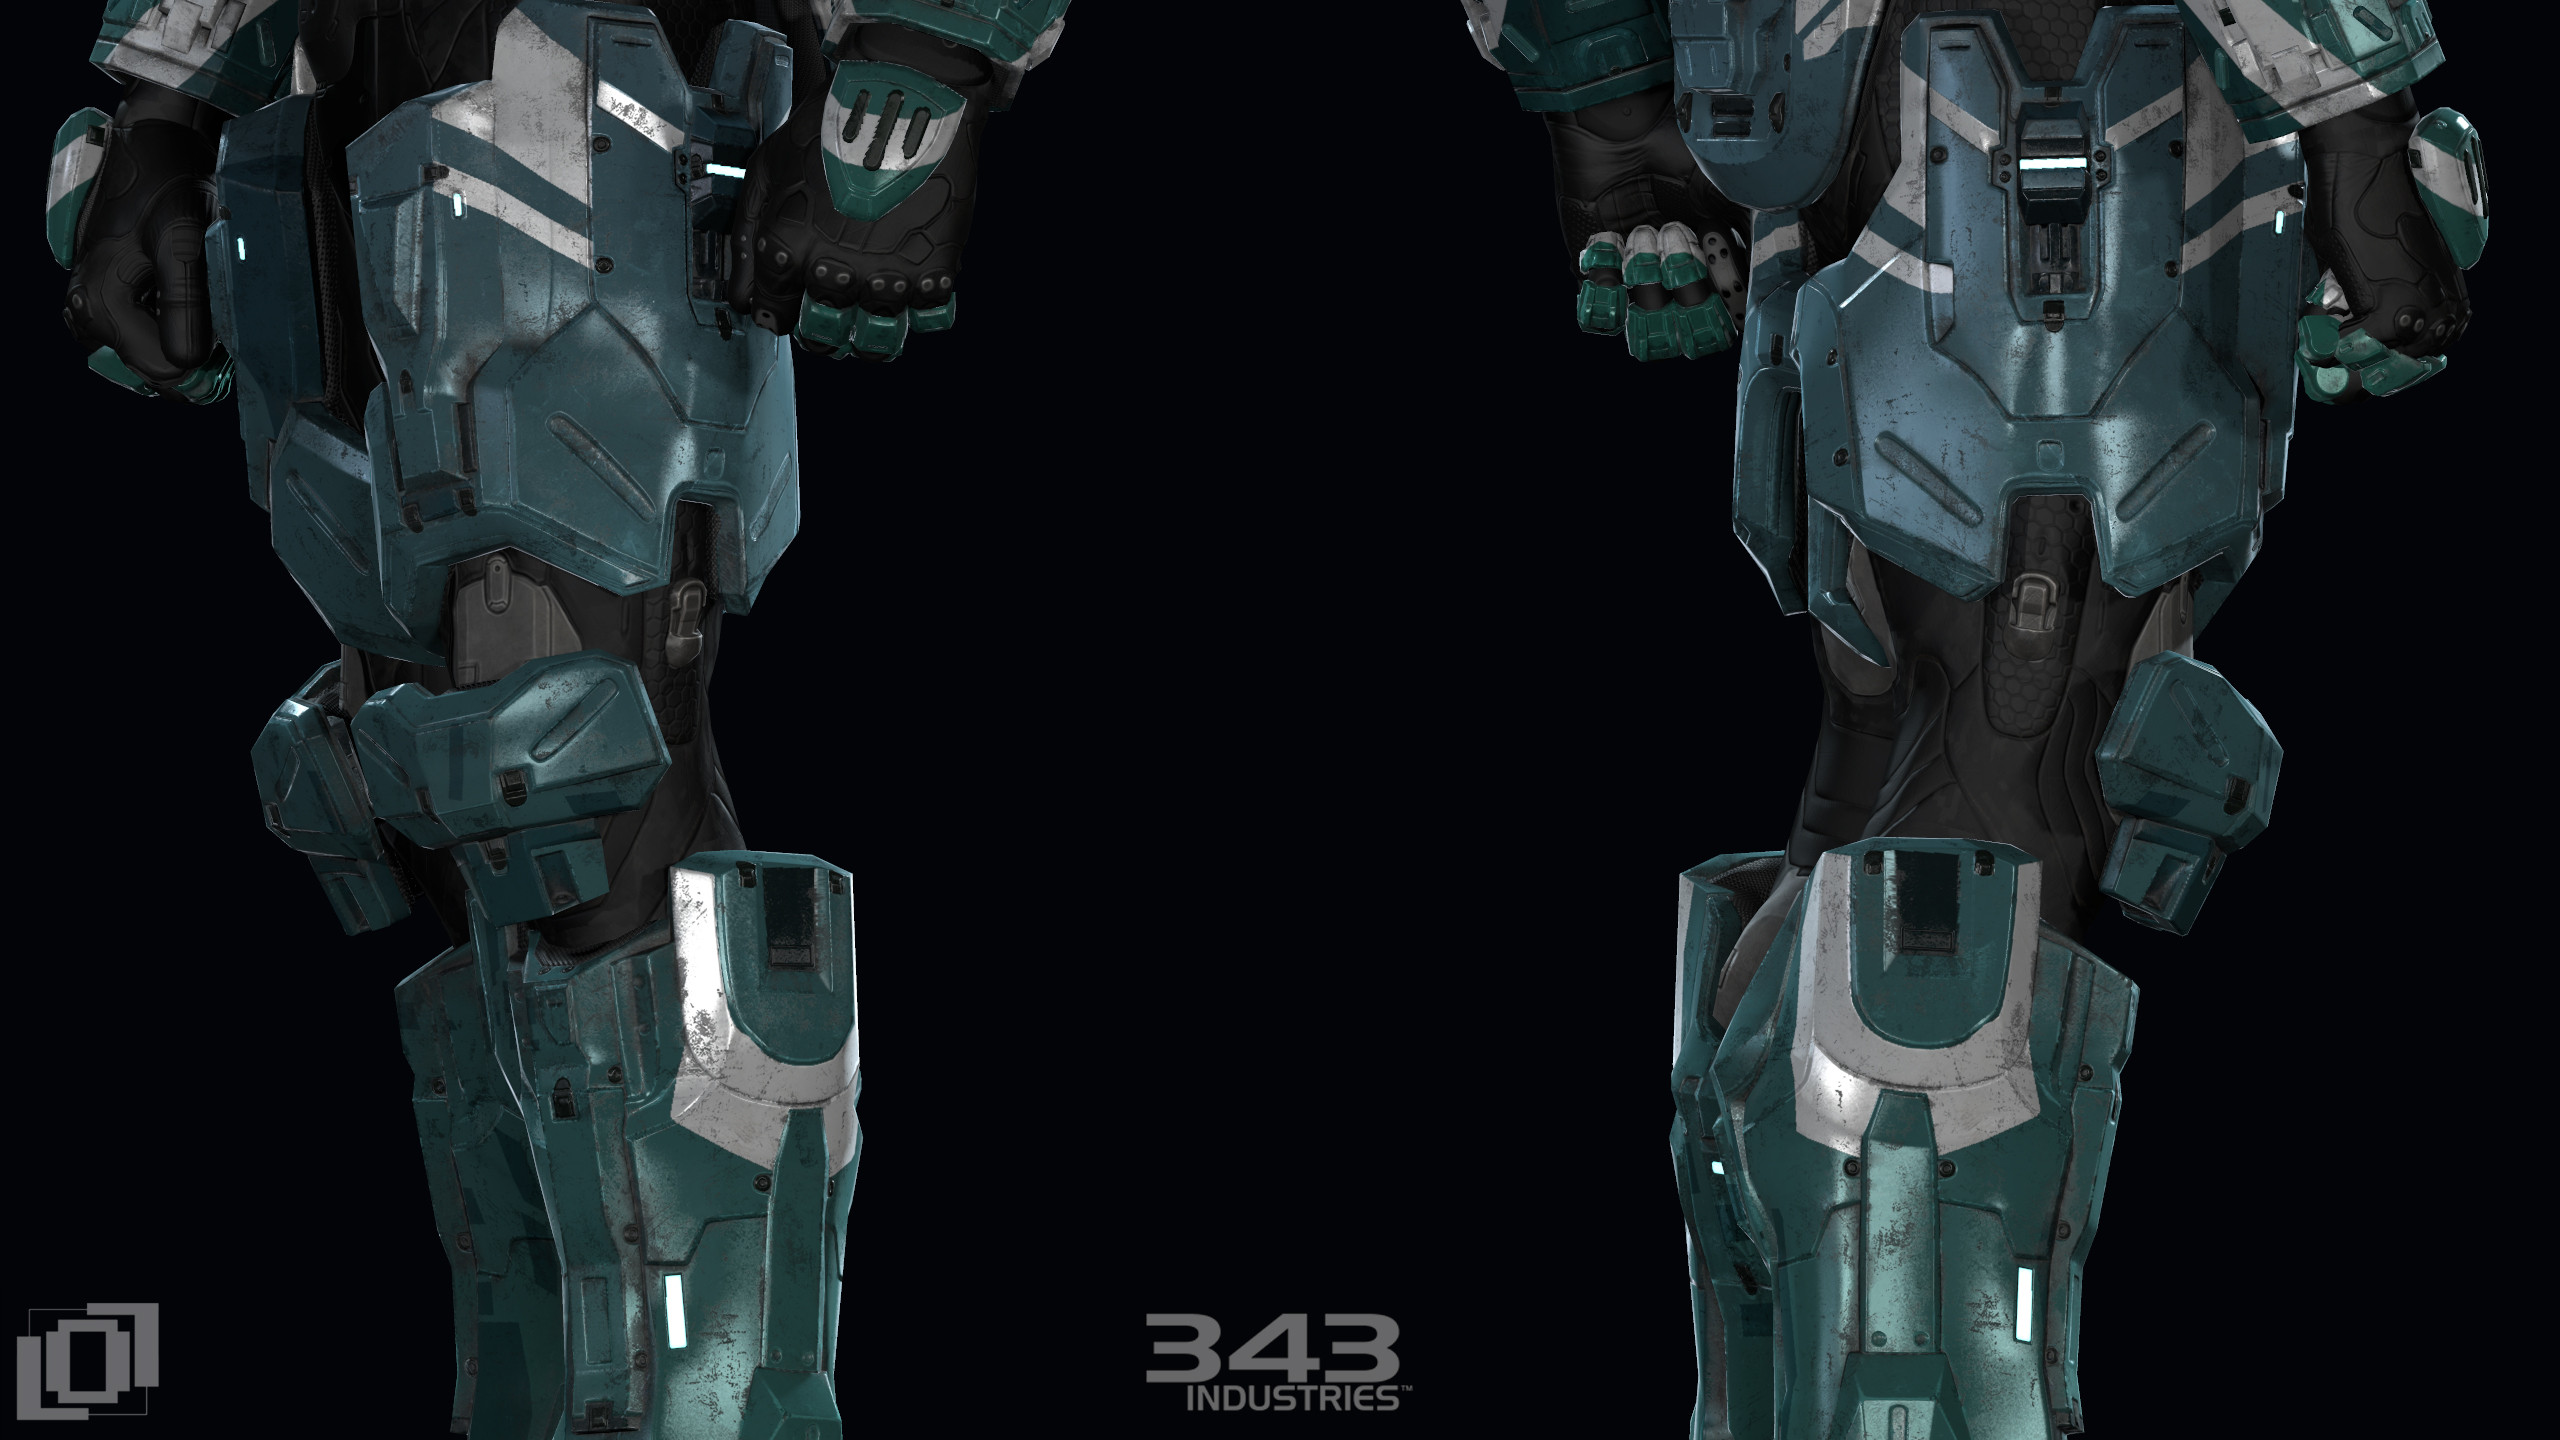 ArtStation - Halo 5 Guardians _ Anubis Armor